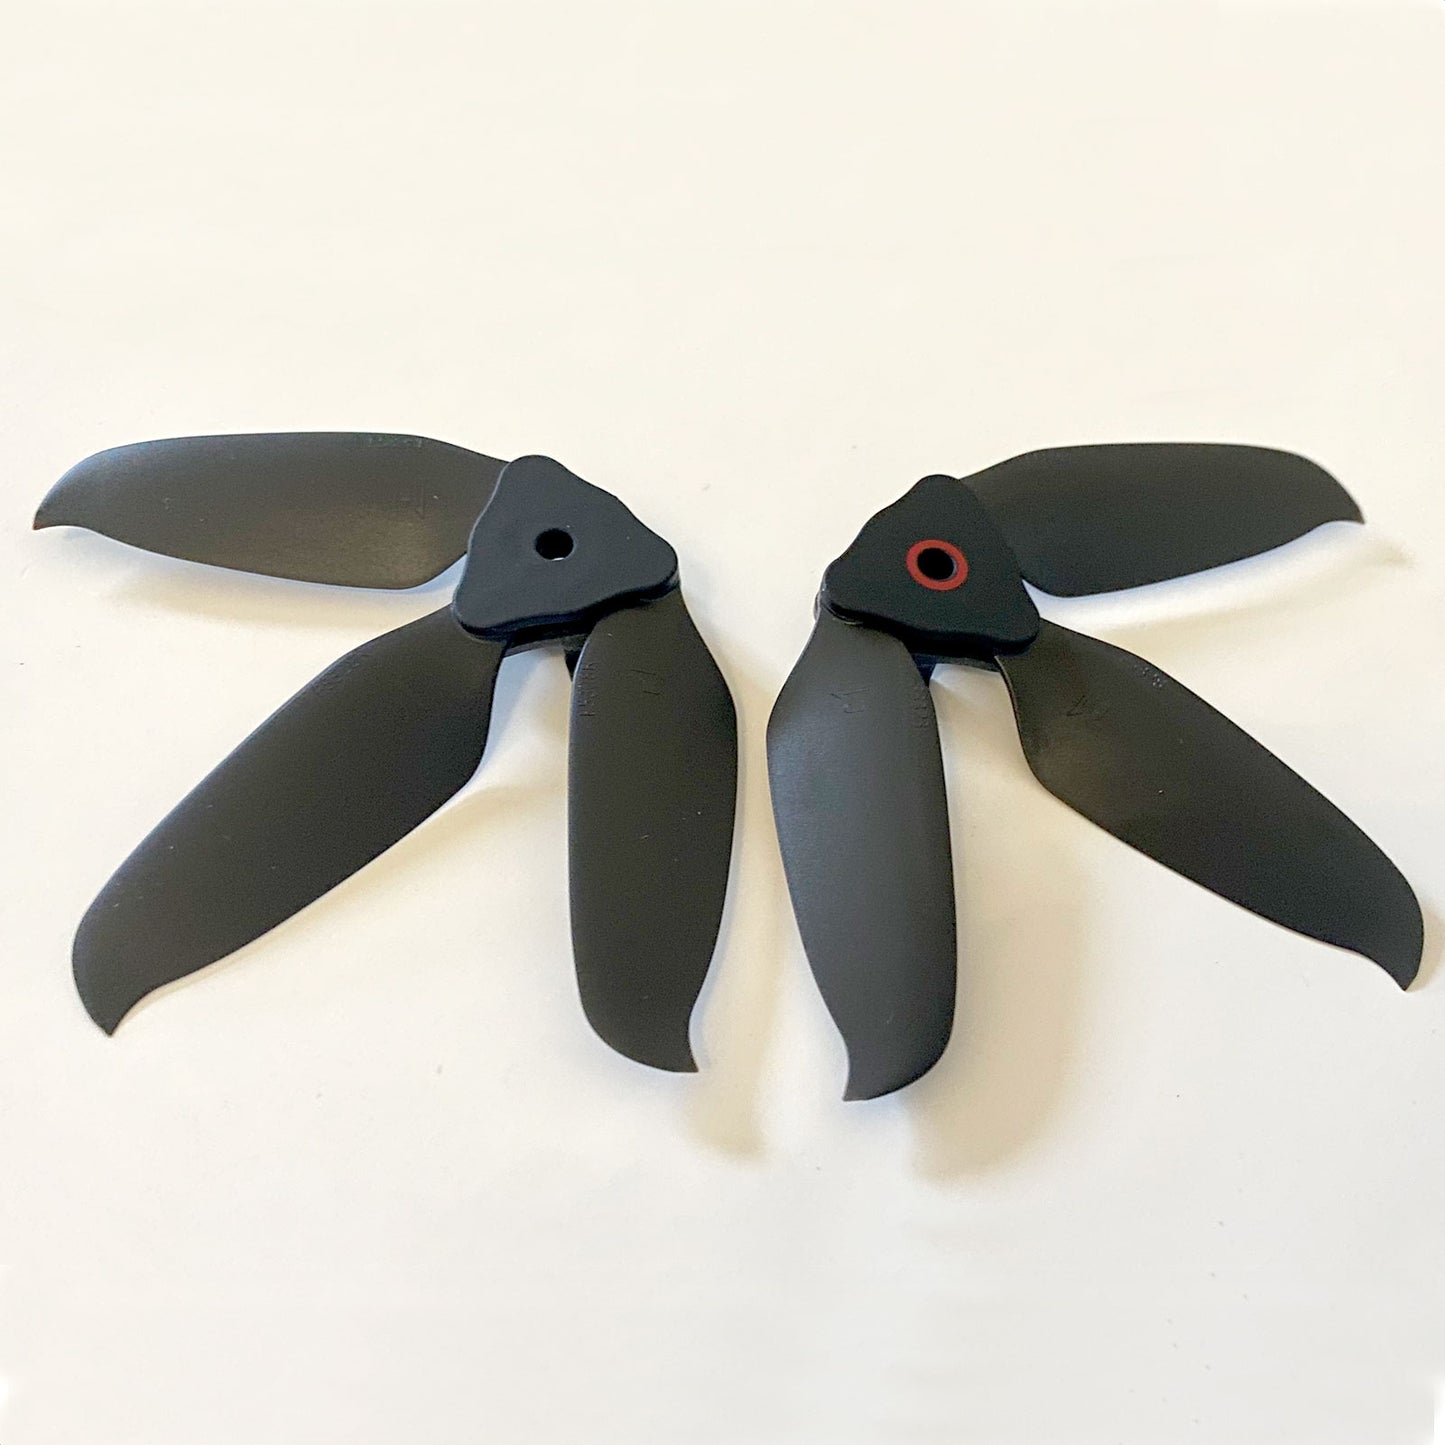 DJI FPV Folding Propellers 5328 Low Noise Quick-Release Props for DJI FPV Drone (Black)